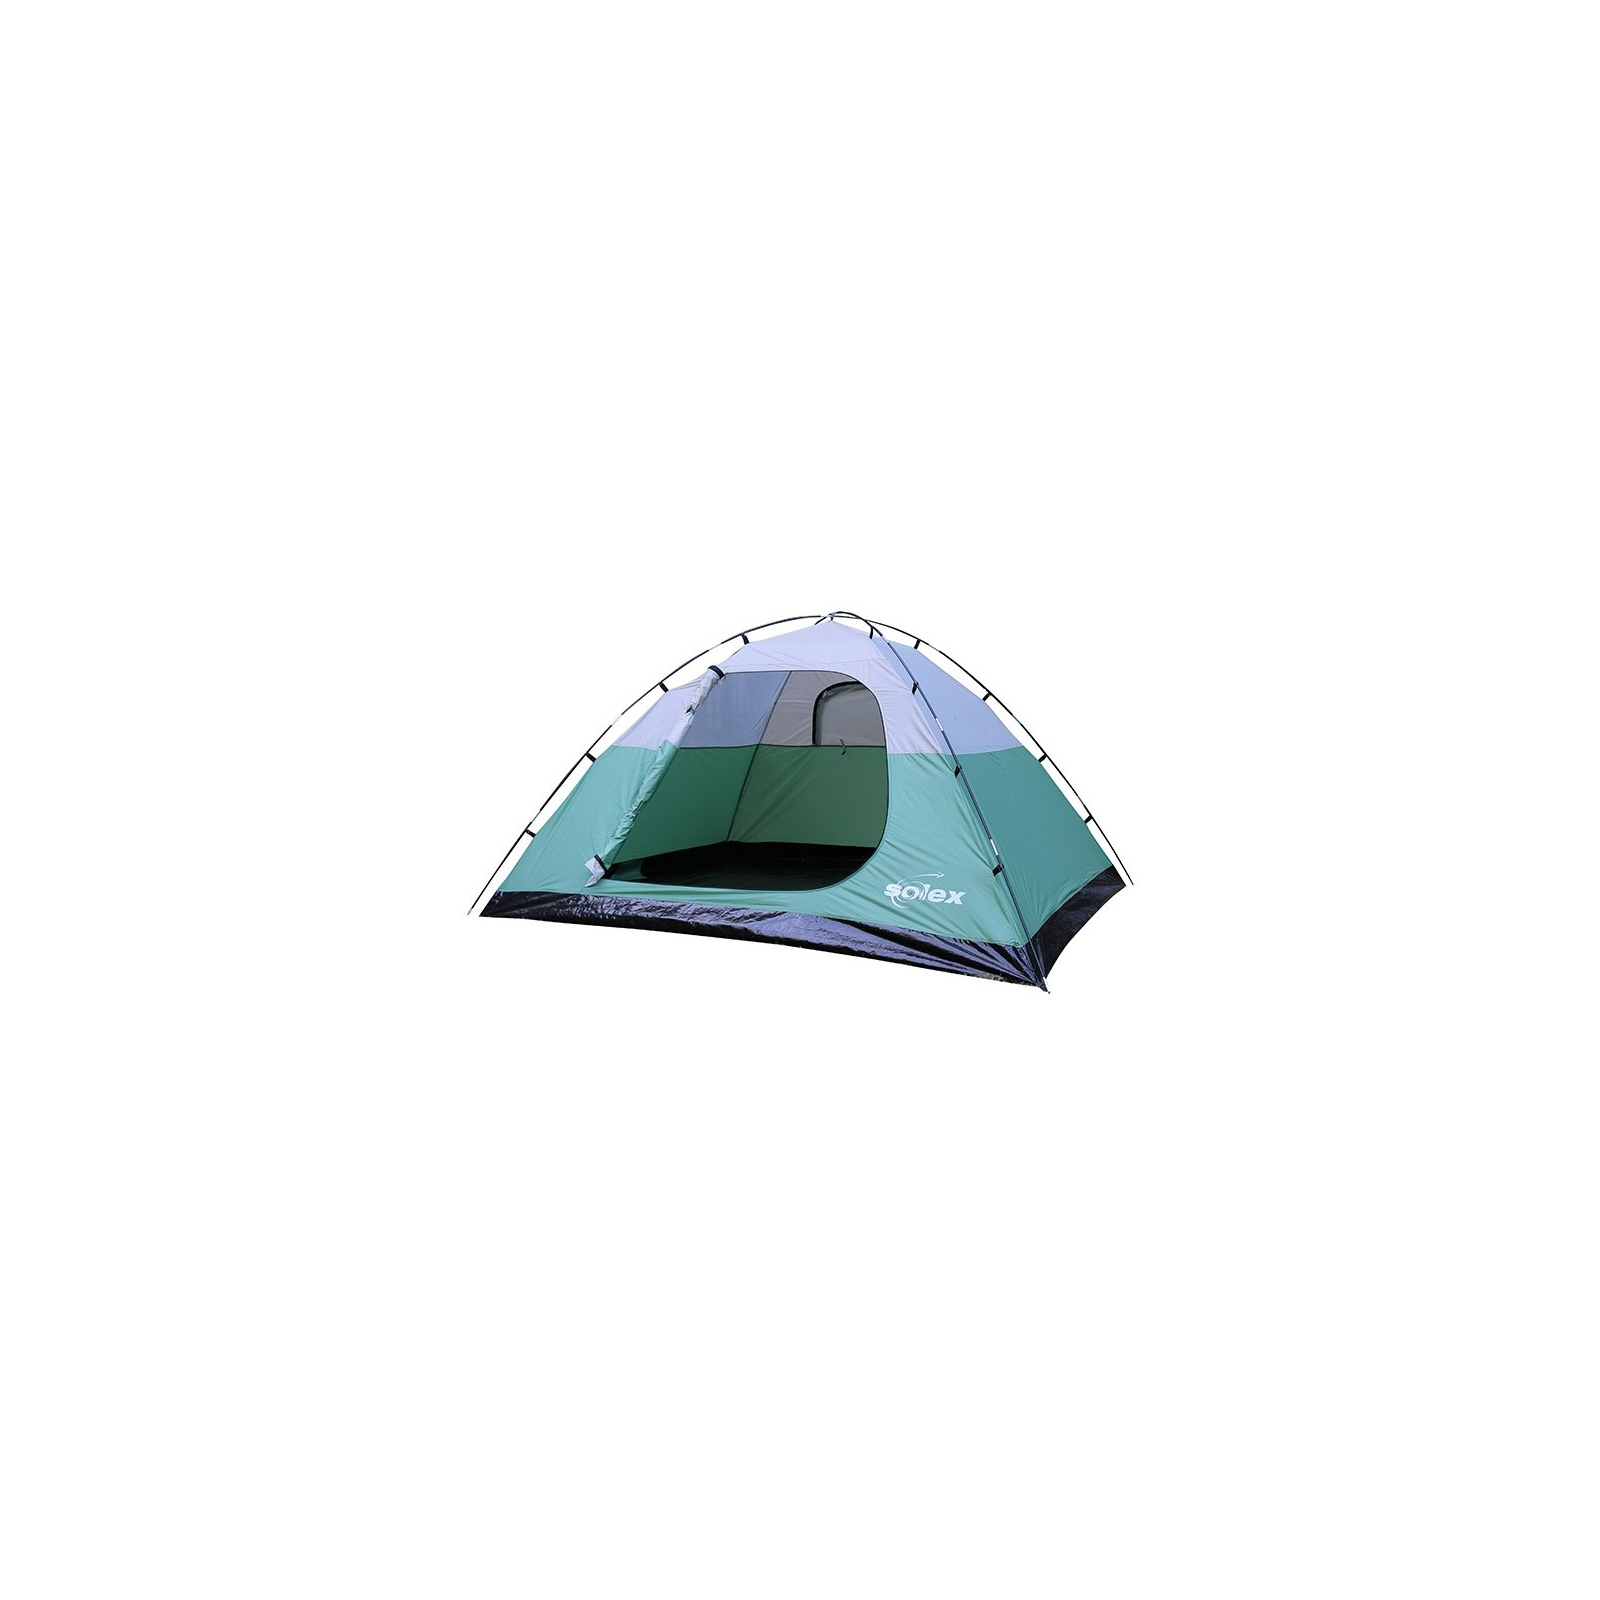 Палатка Solex четырехместная зеленая (82115GN4)